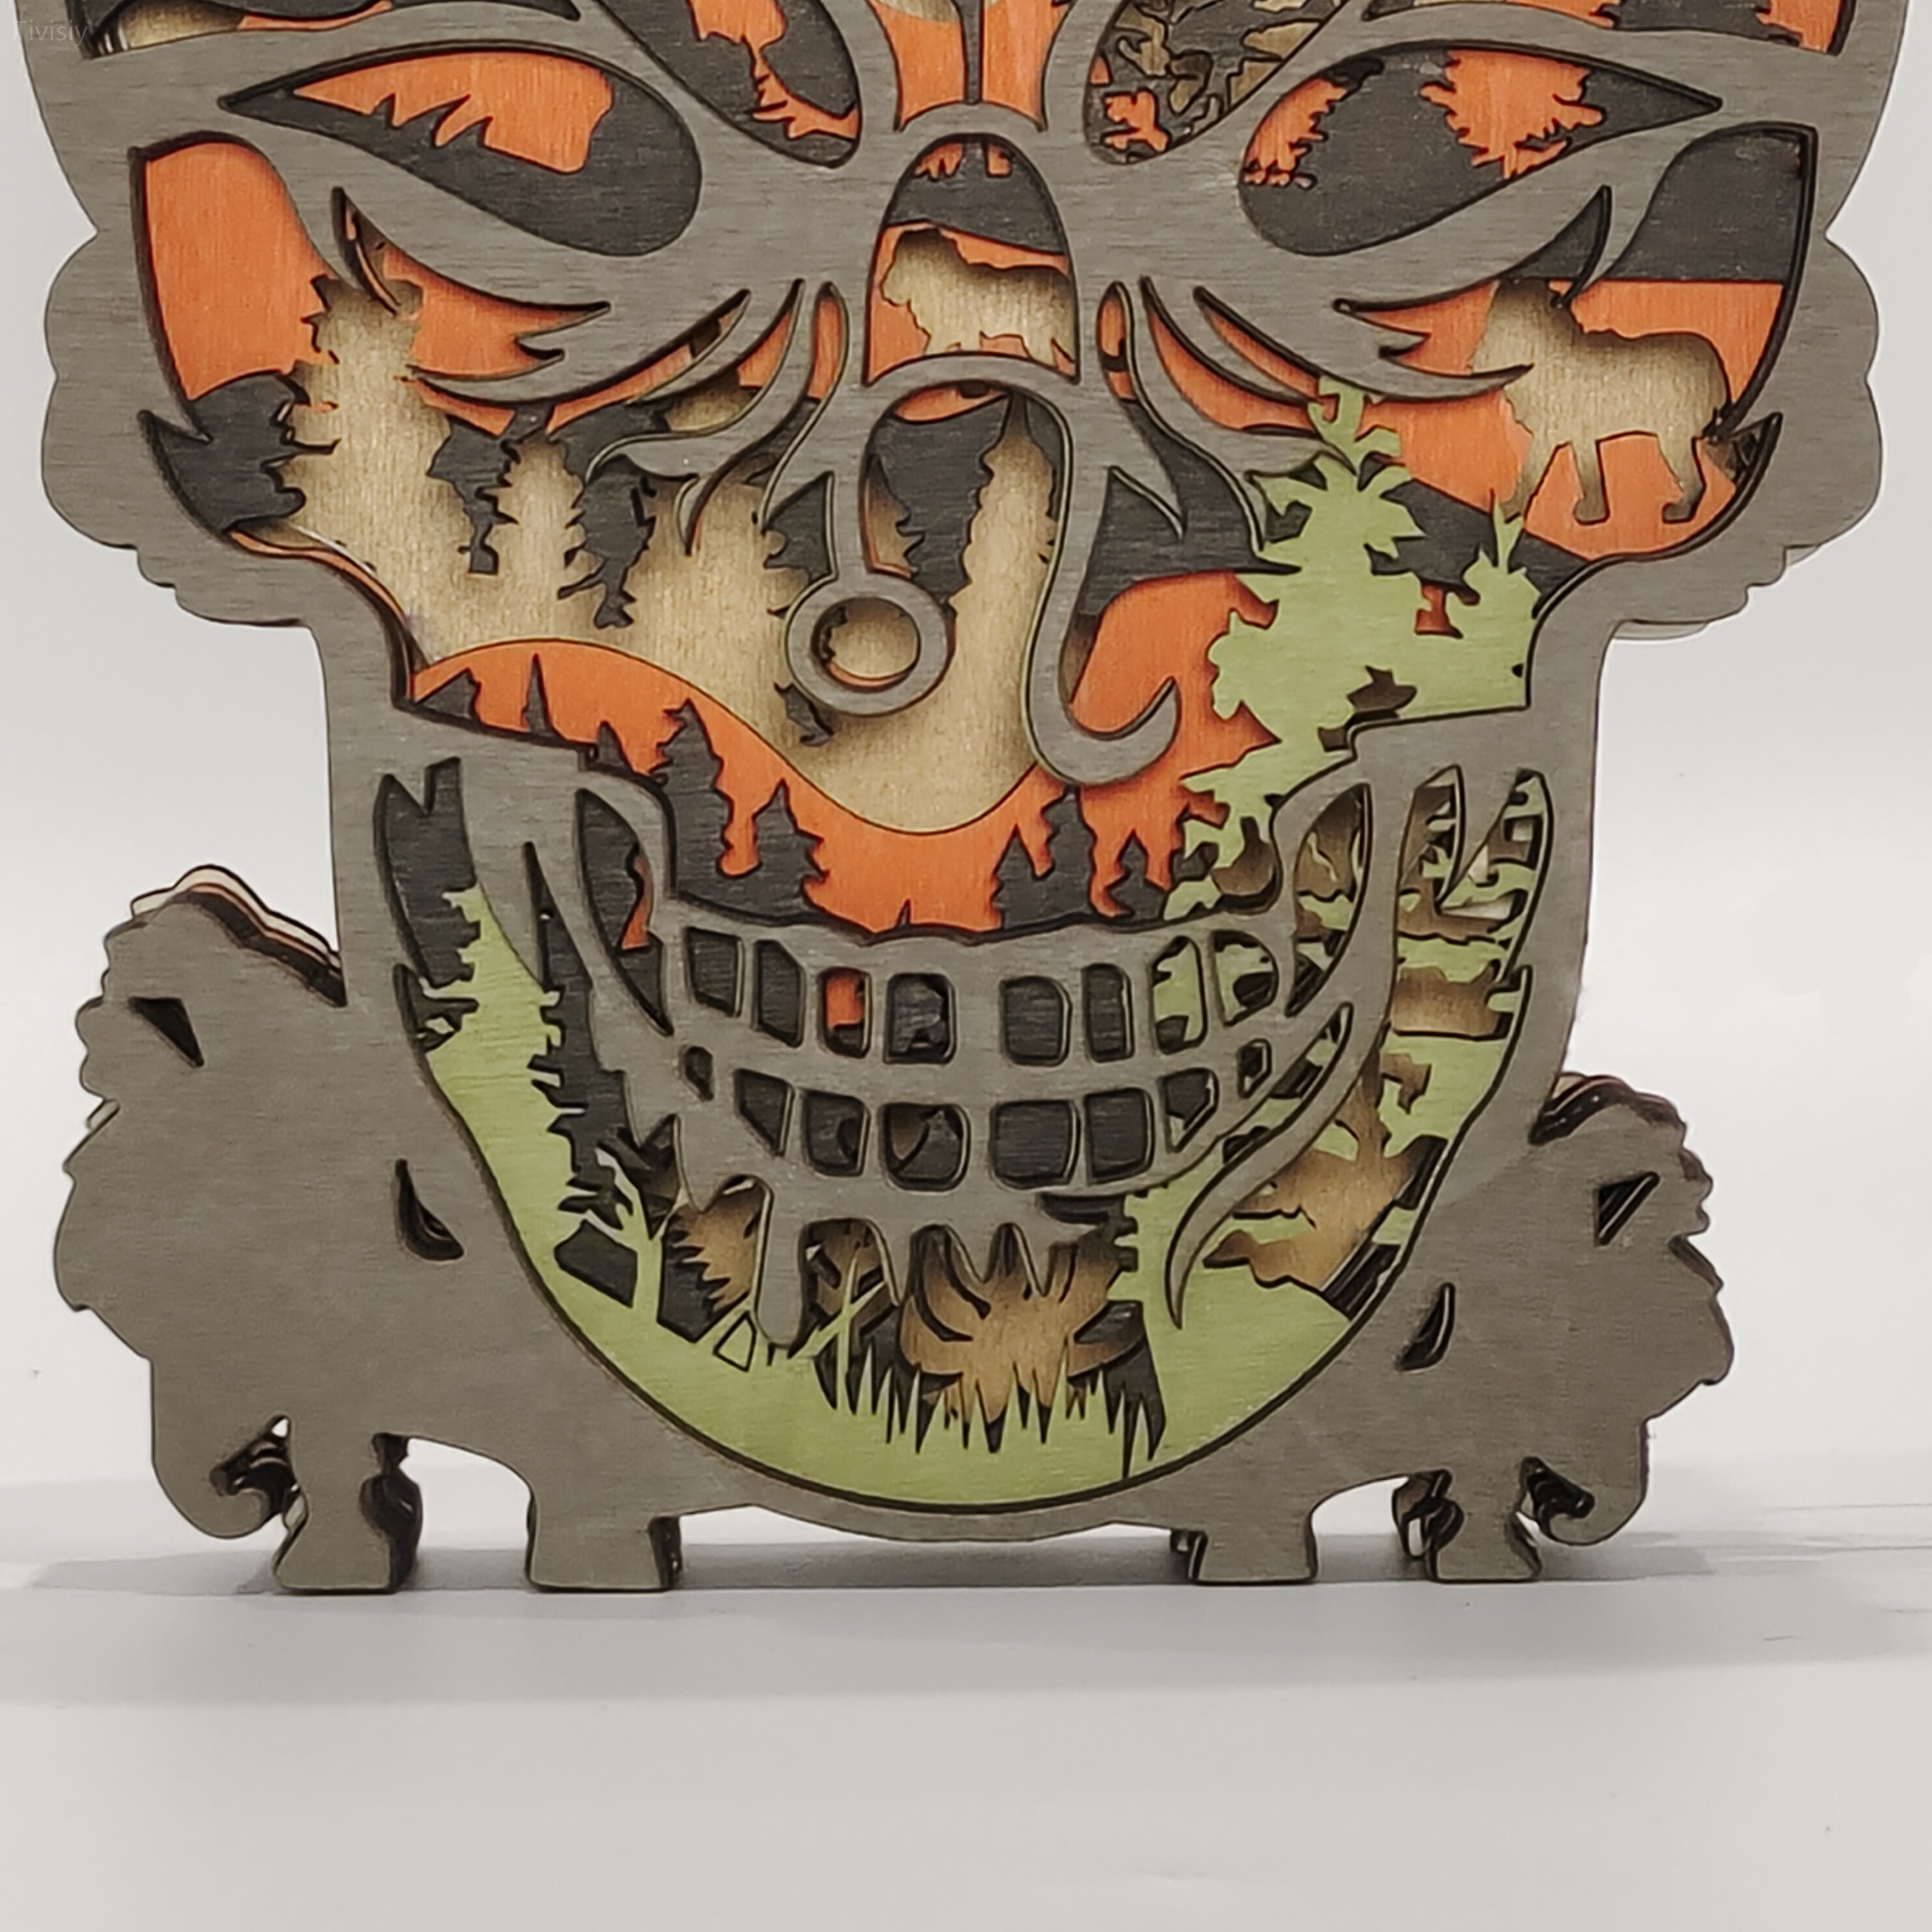 Leo Skull Wooden Night Light, Suitable for Home Decoration,Holiday Gift,Art Night Light